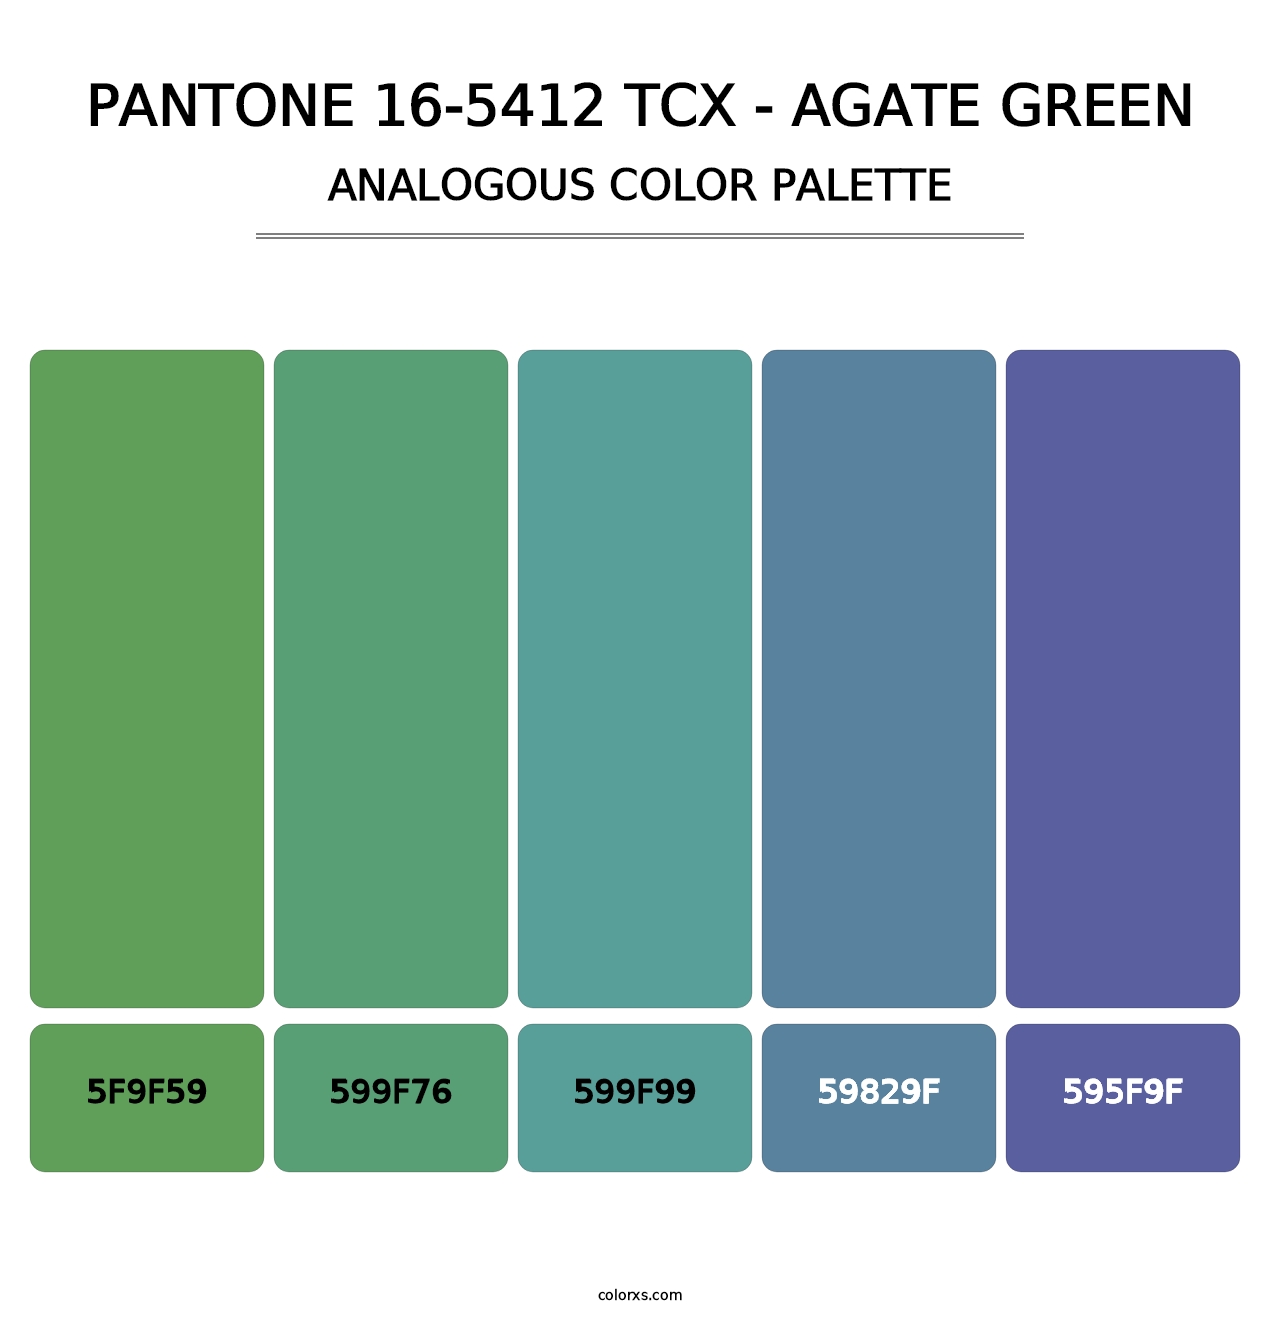 PANTONE 16-5412 TCX - Agate Green - Analogous Color Palette